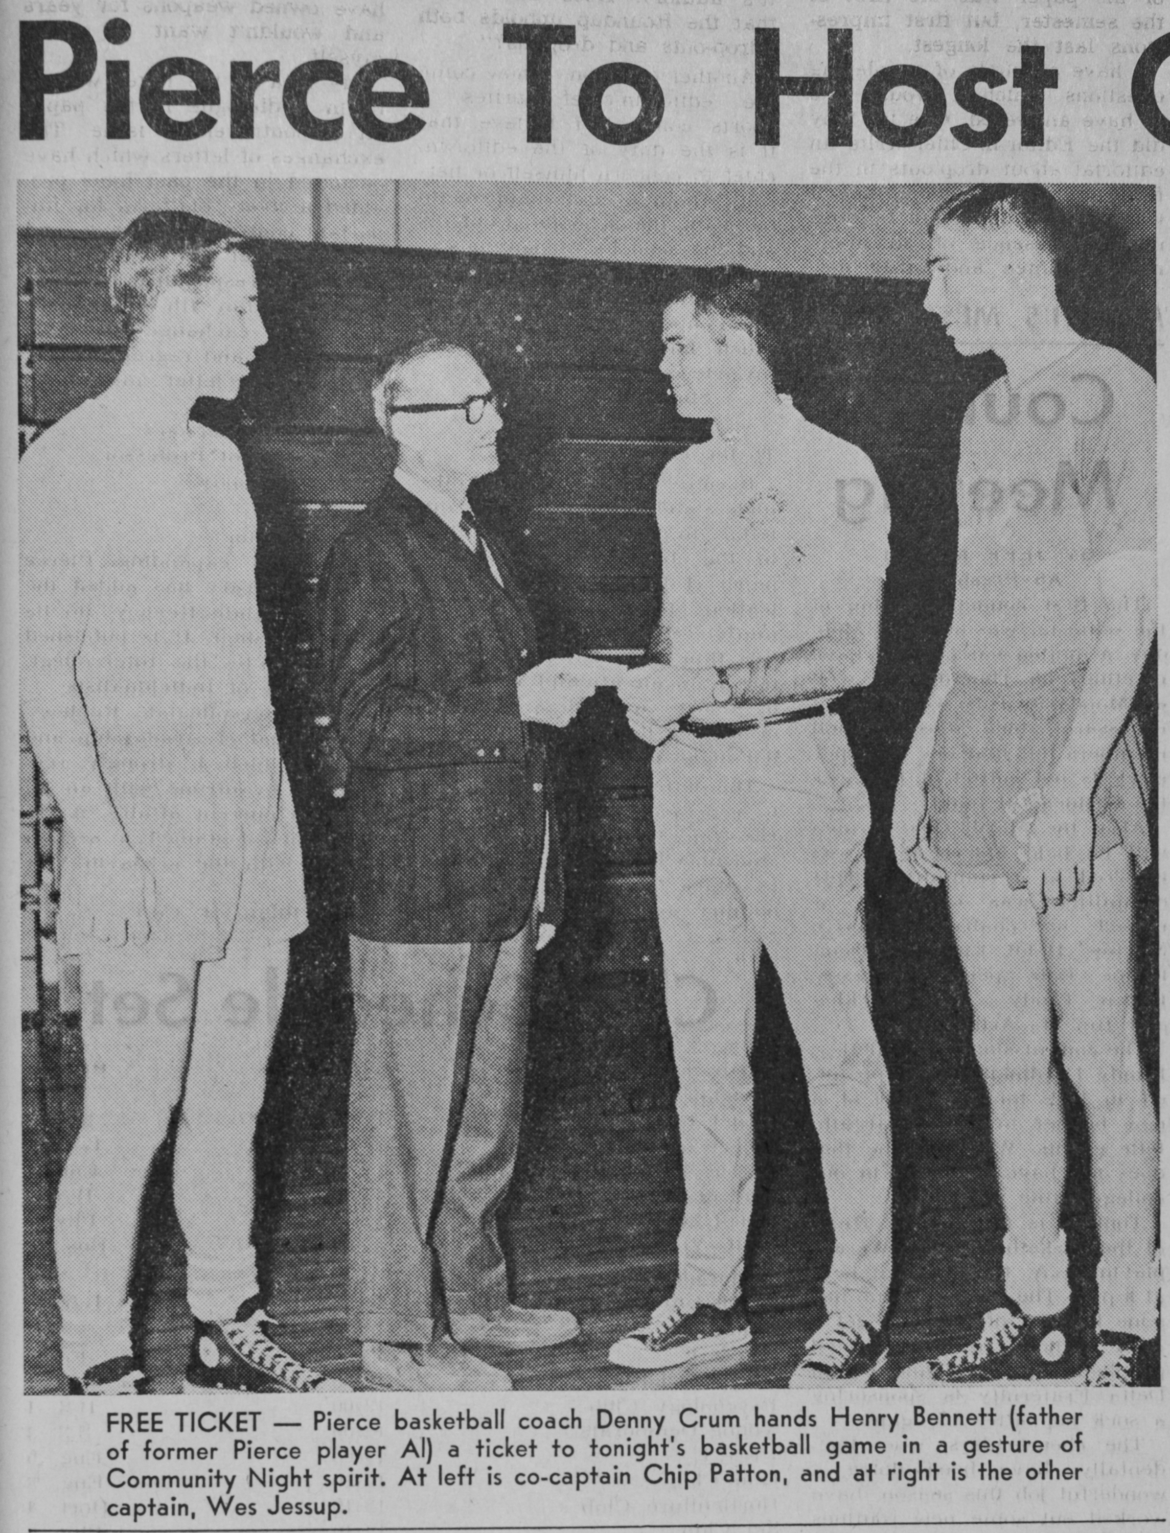 Denny Crum (1937-2023), former Pierce basketball player and coach